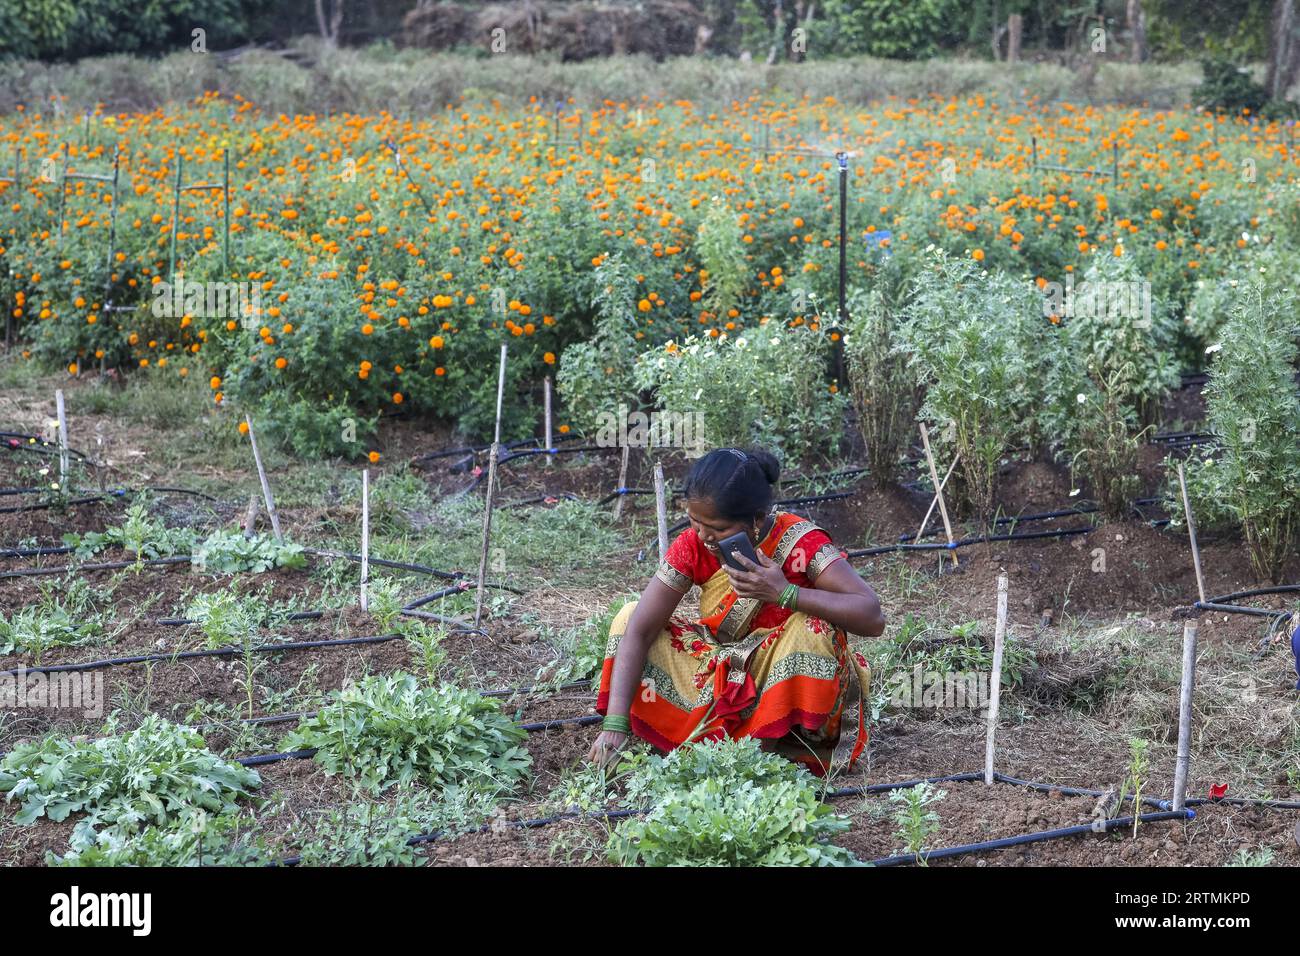 Gärtner in einem der Gärten des Goverdan Ecovillage, Maharashtra, Indien Stockfoto